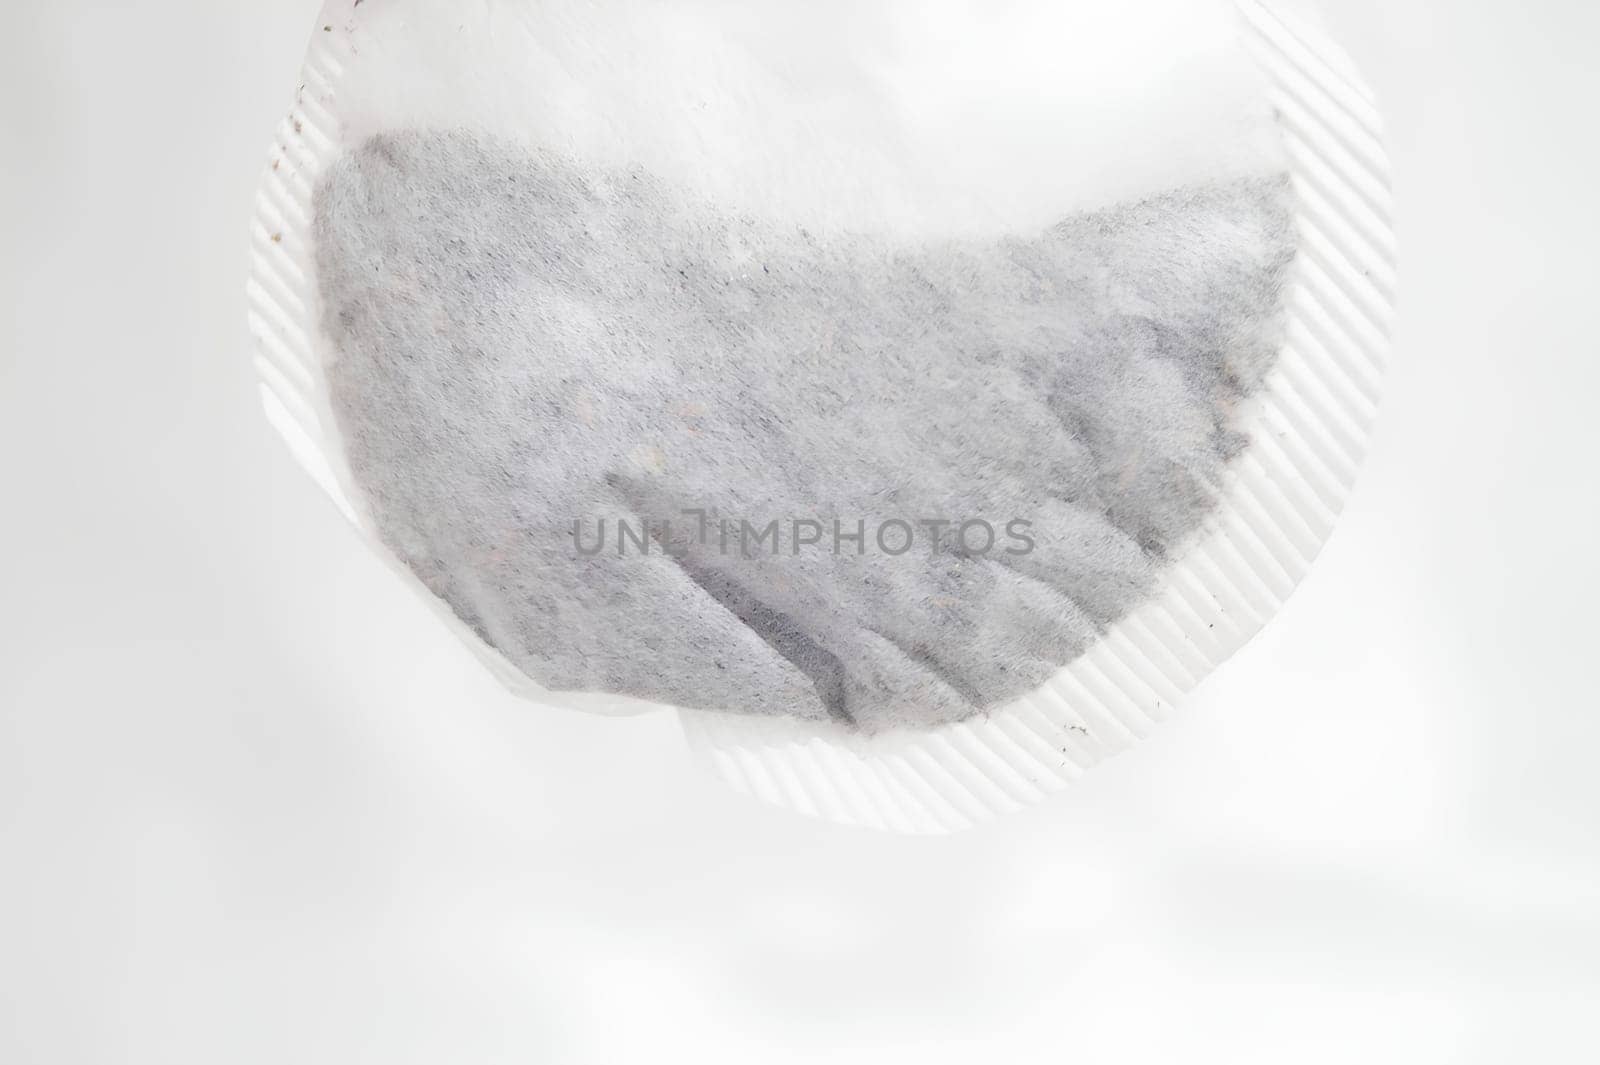 Single White Tea Bag. High quality photo